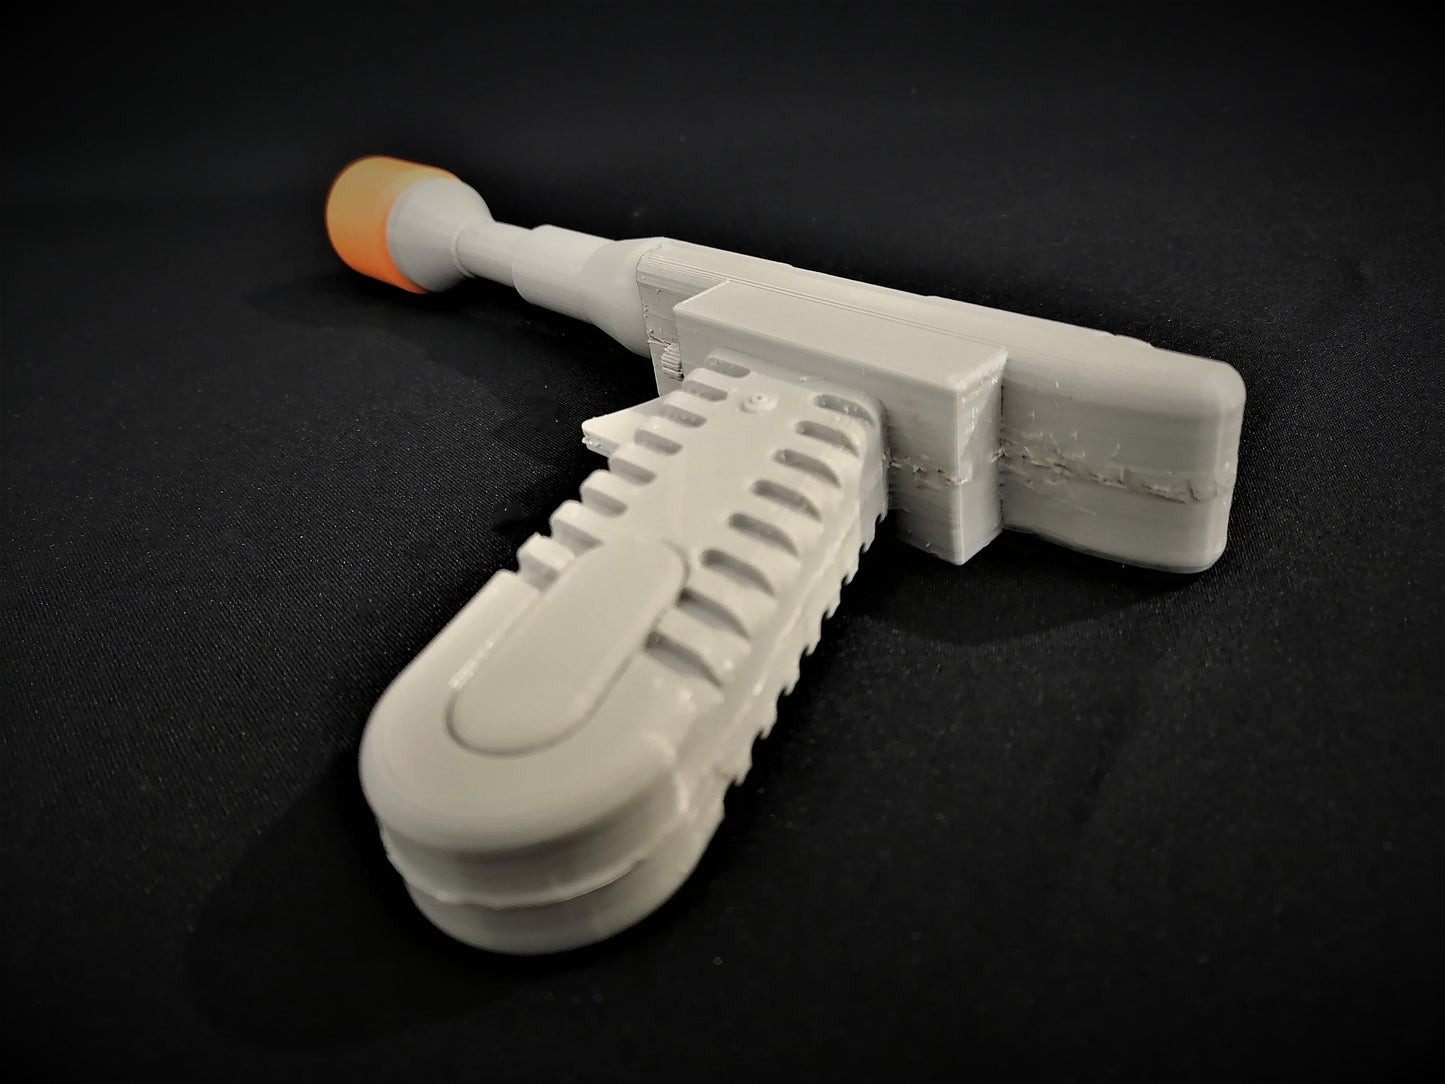 KYD-21 - Sci-Fi Blaster - 3D Printed Replica